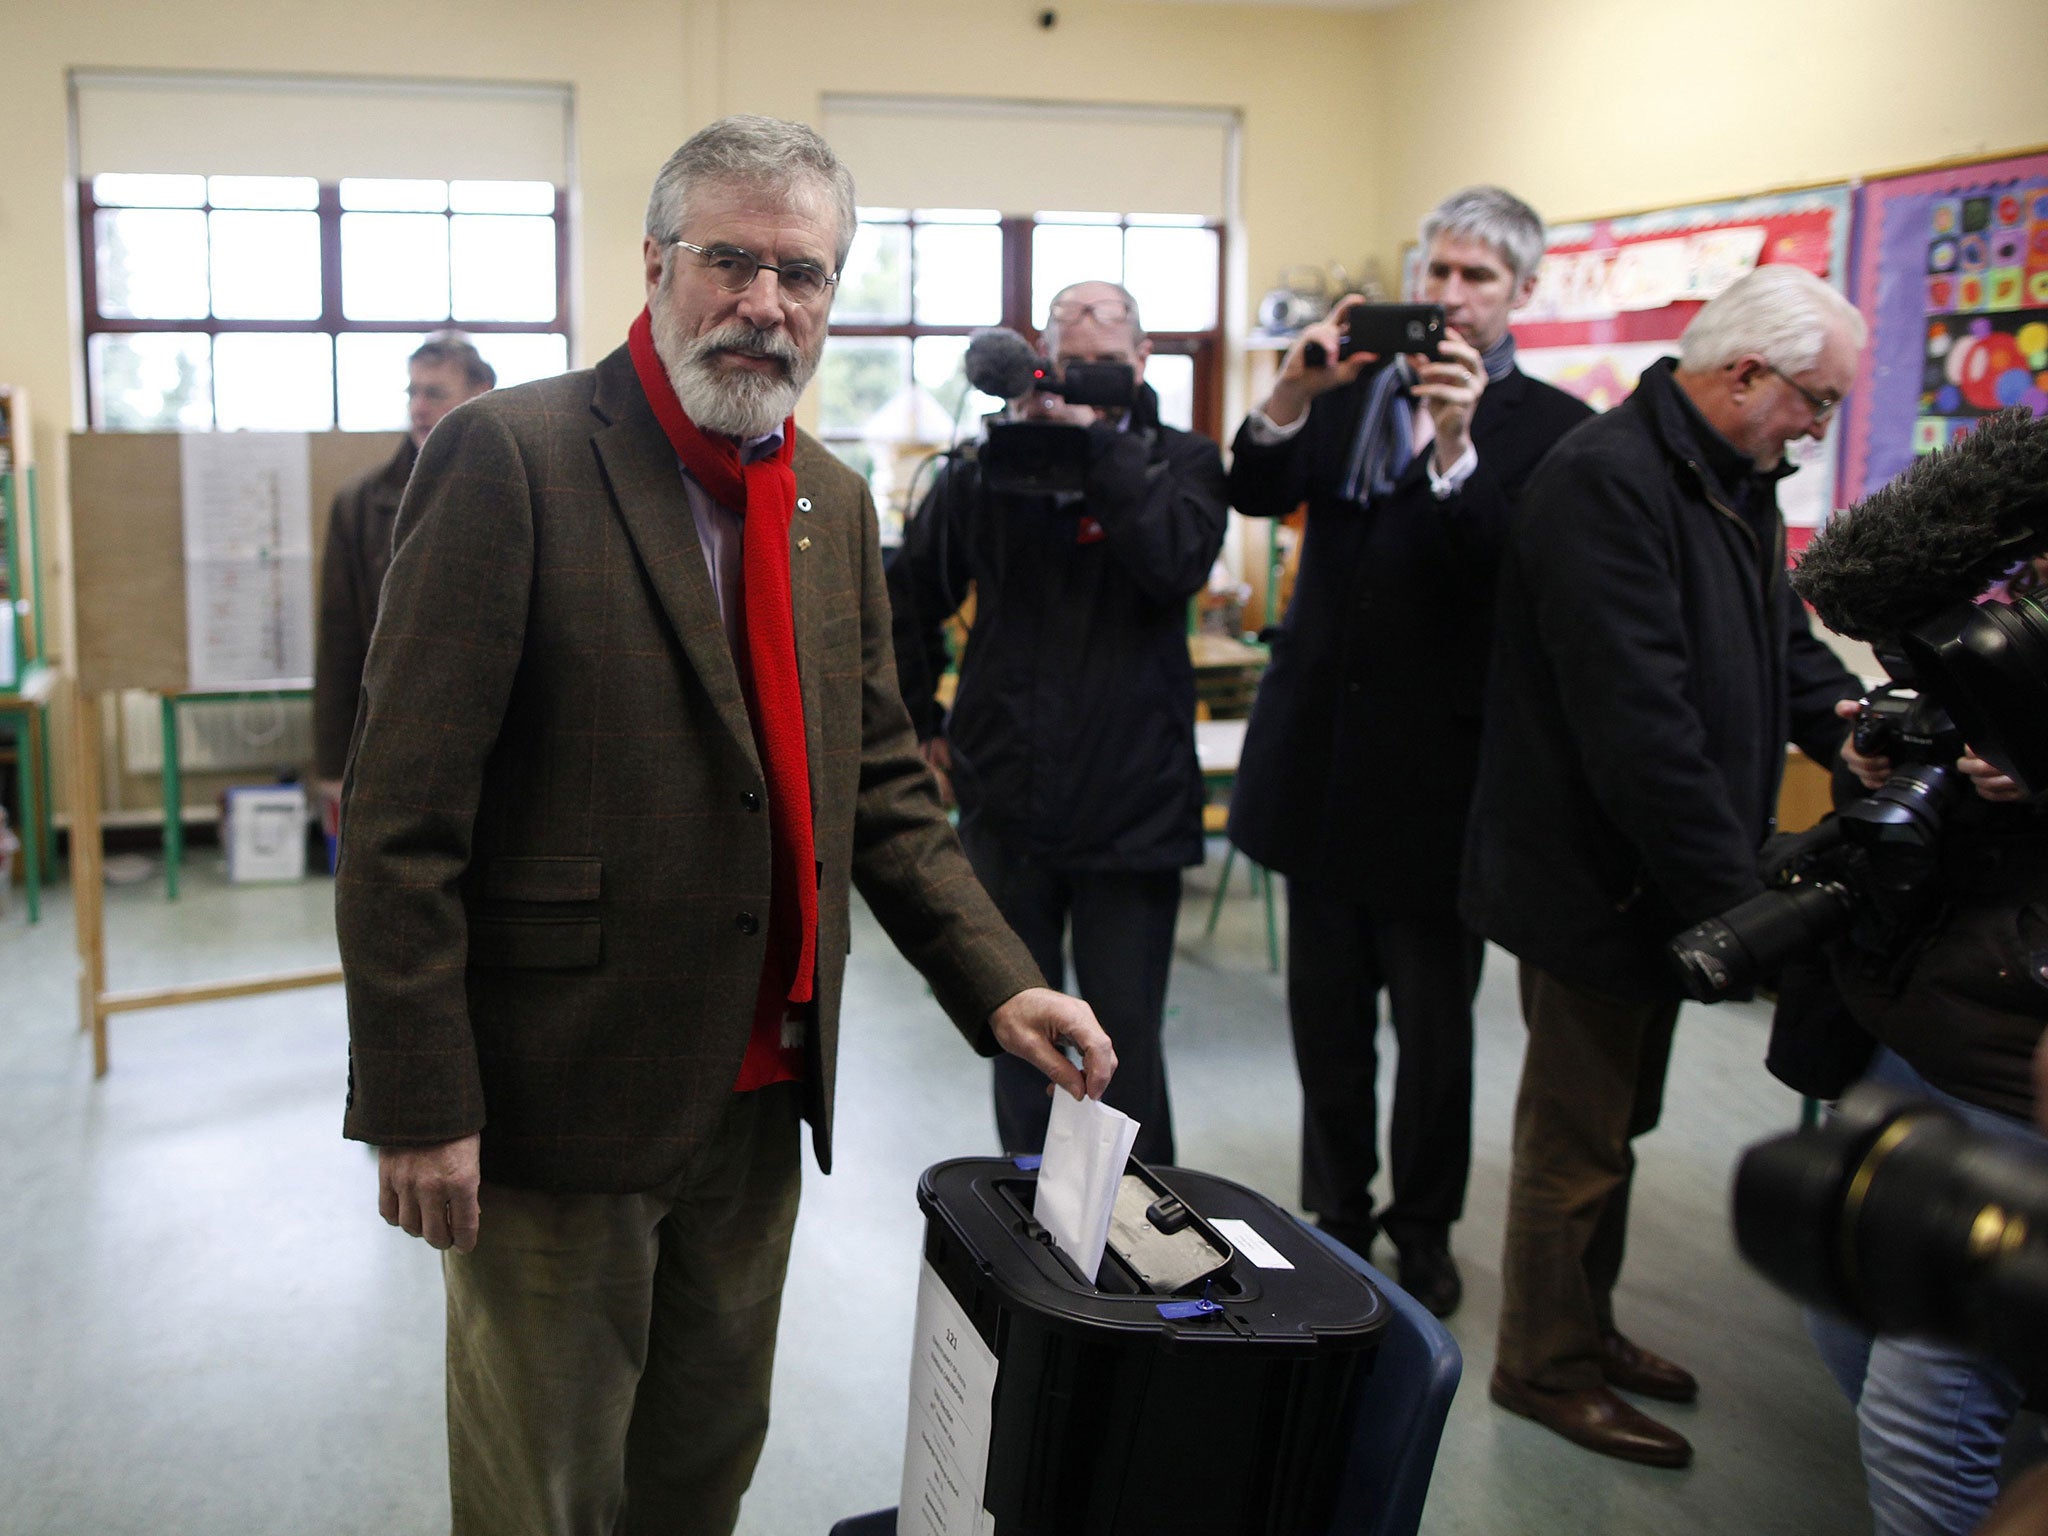 Sinn Fein leader Gerry Adams casts his vote